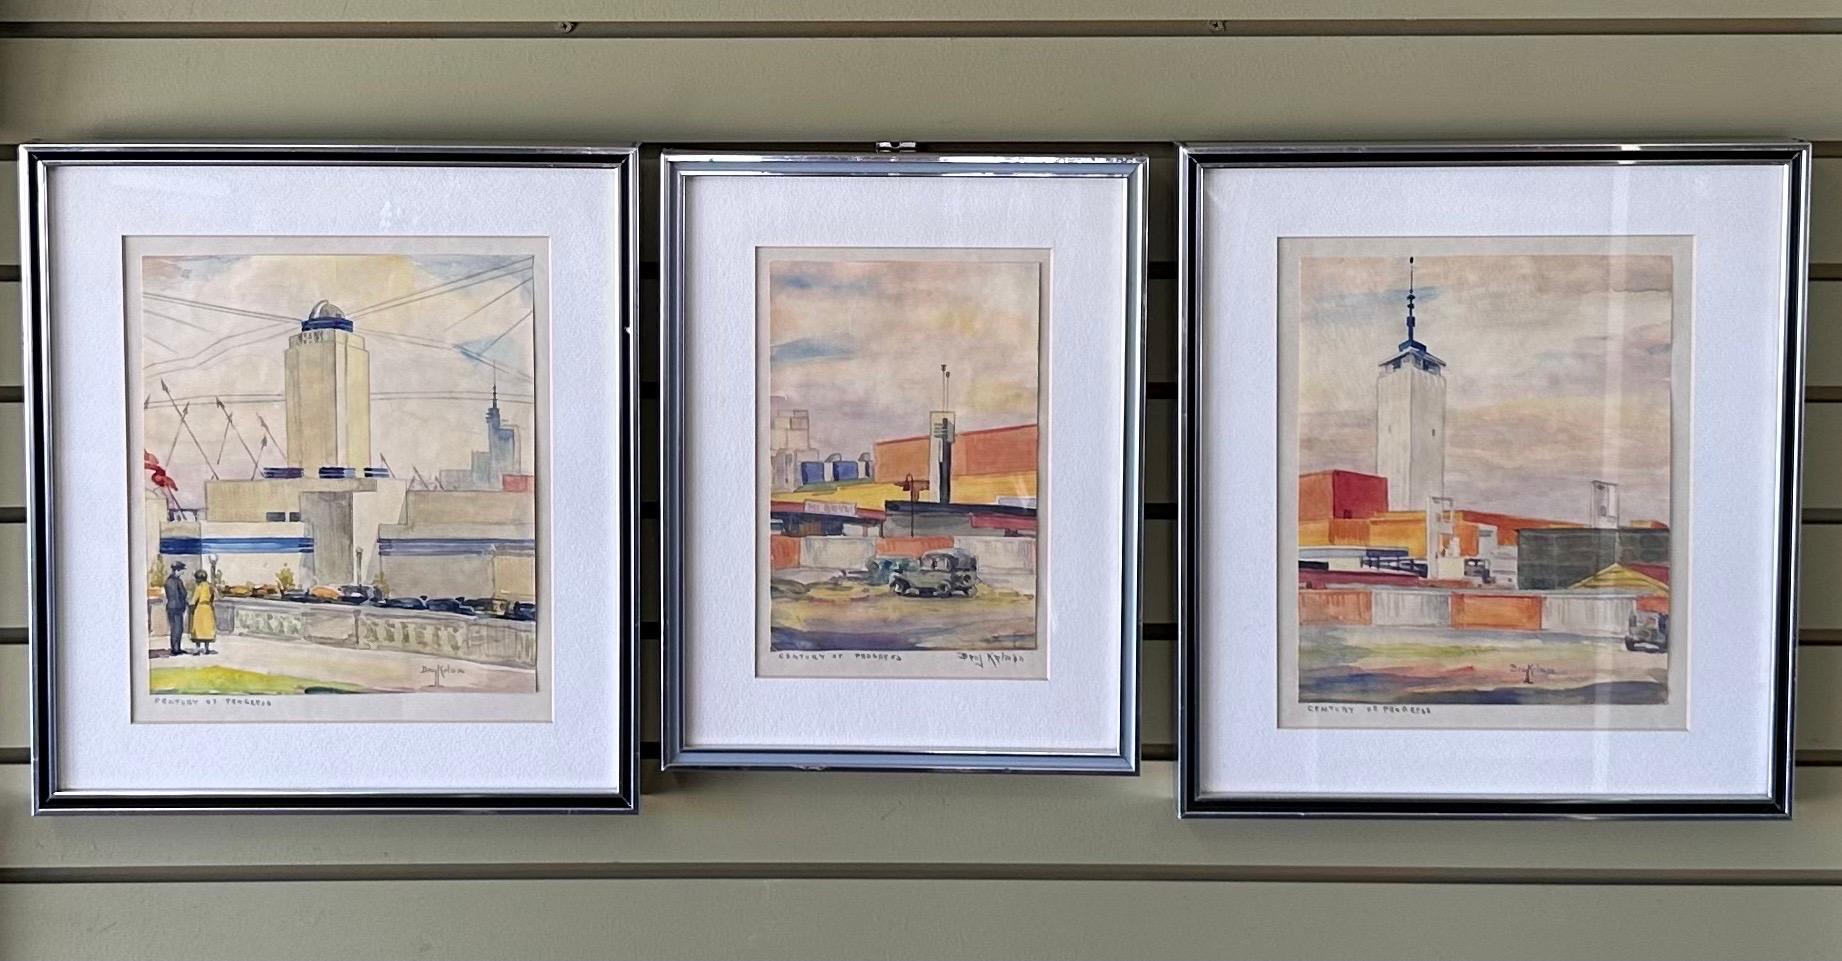 A beautiful set of three original watercolor painting 